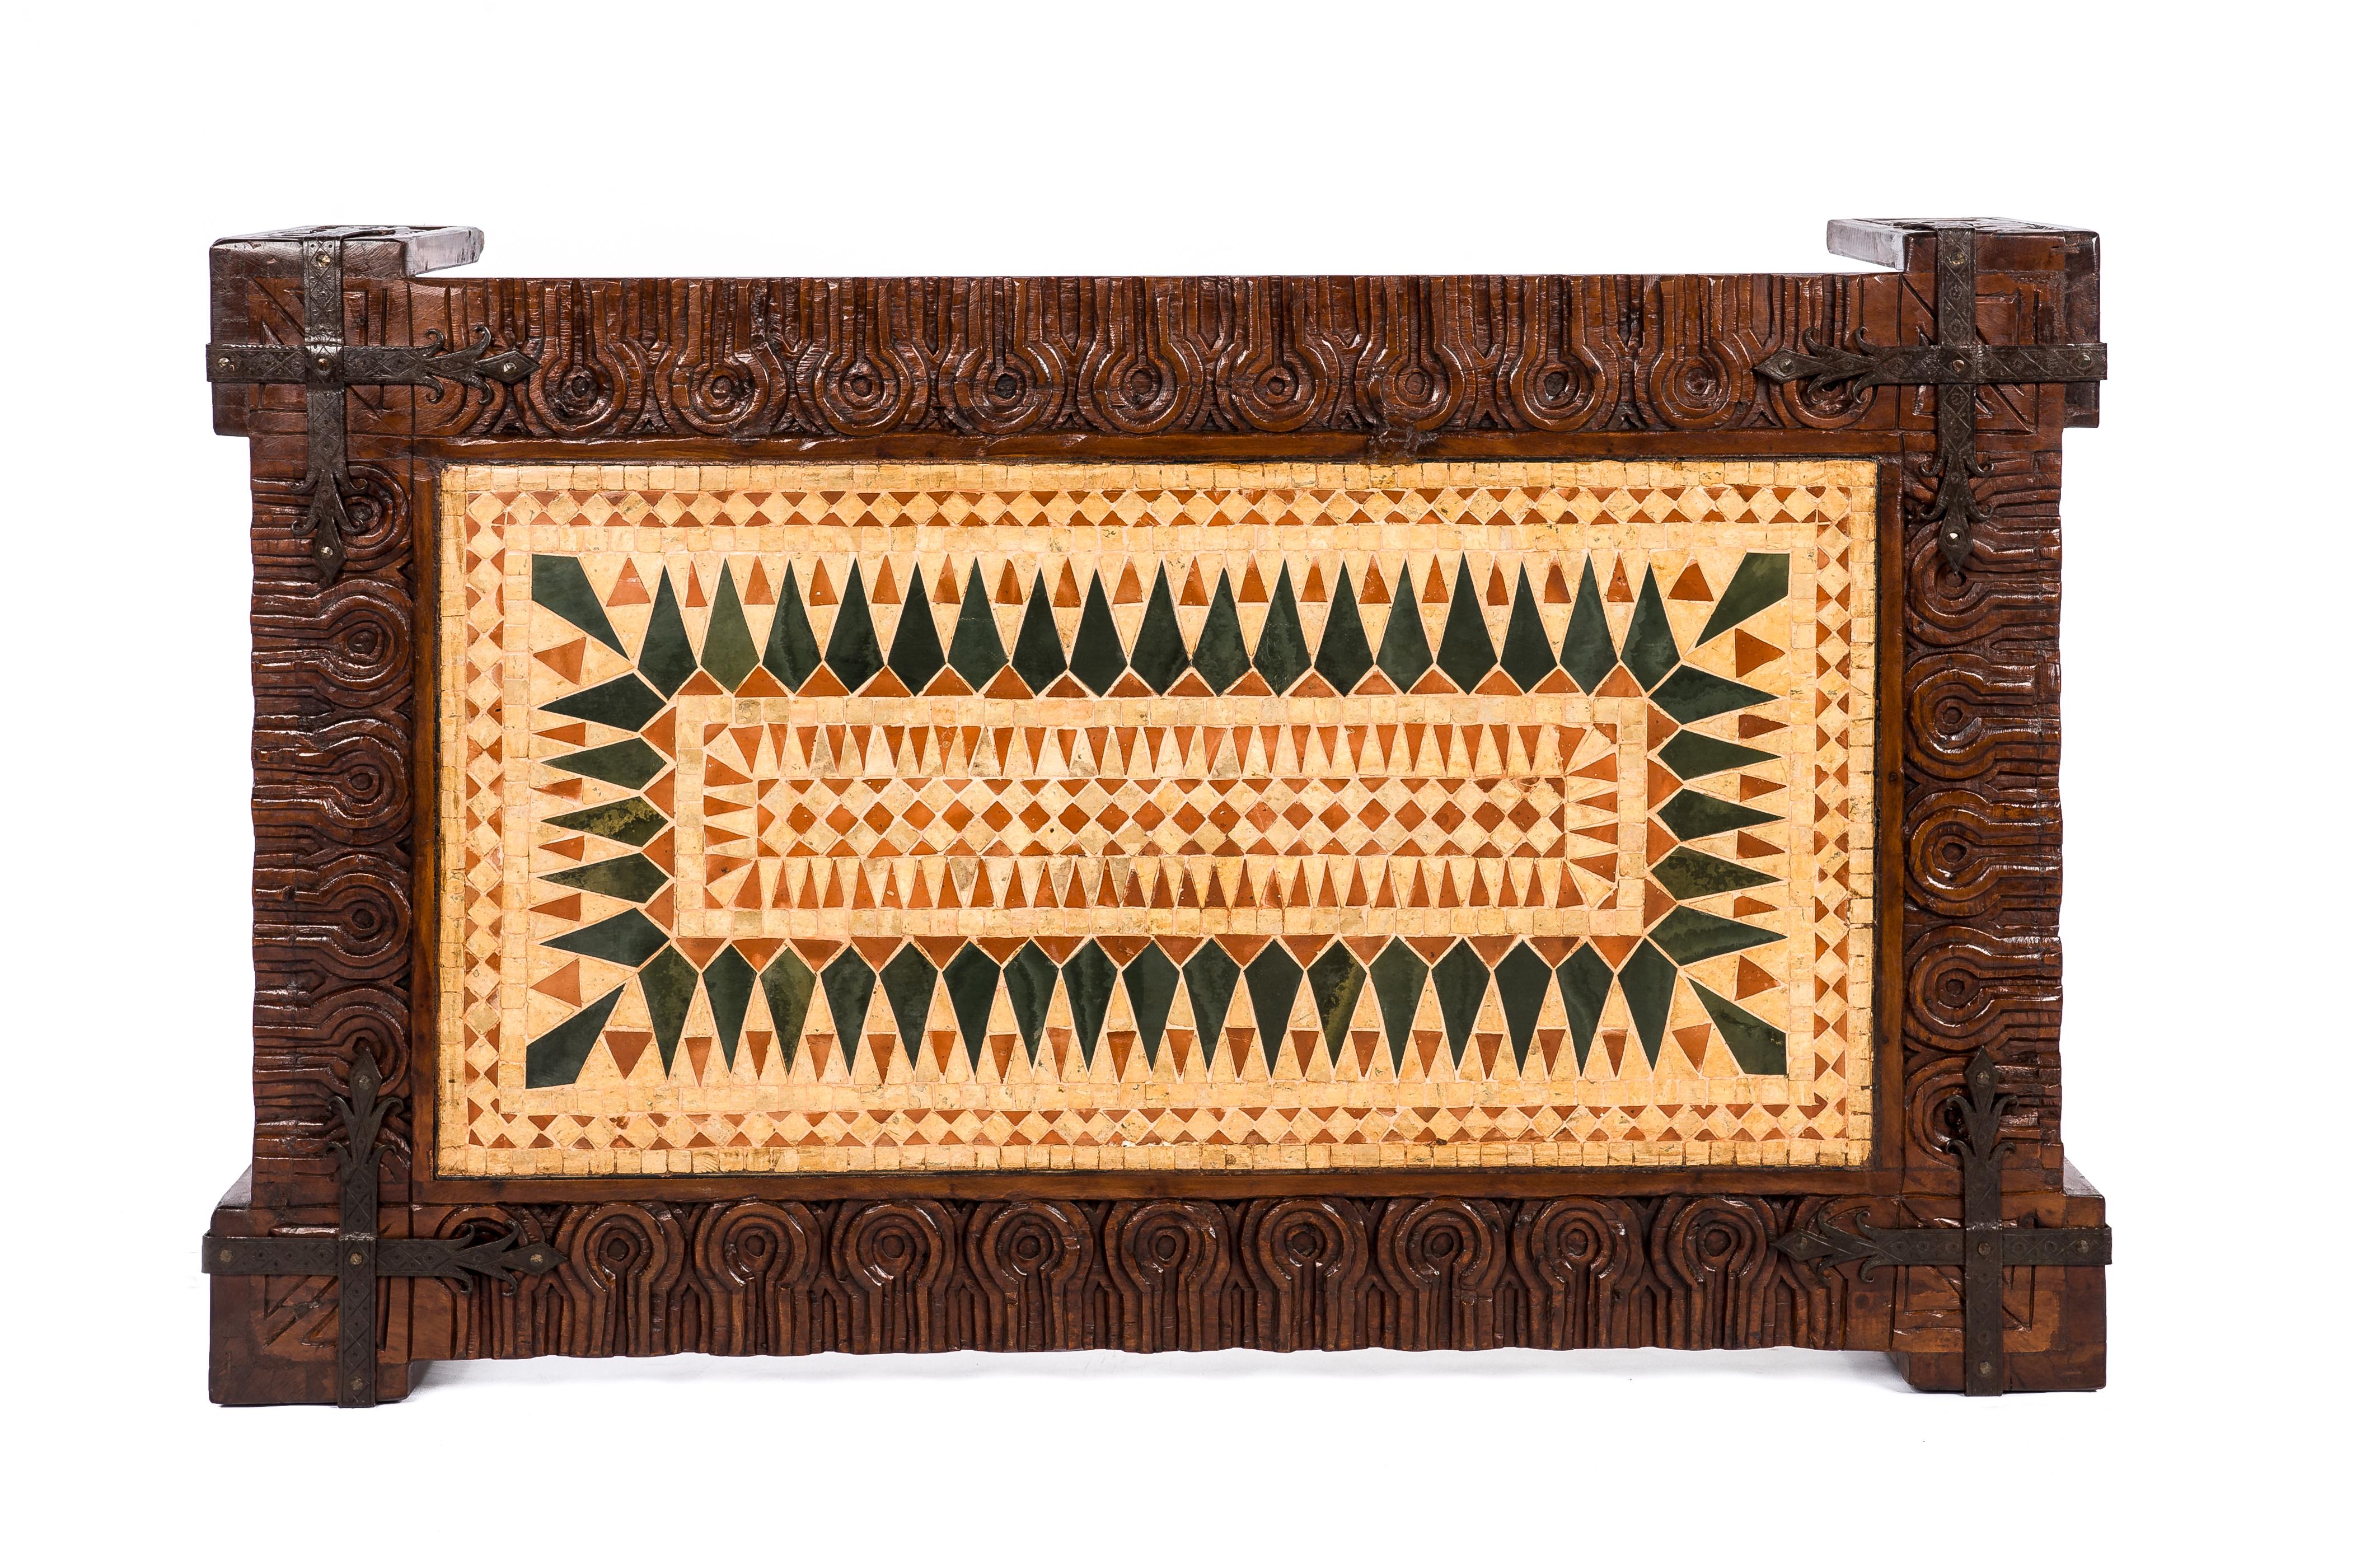 Moorish Mid-Century Spanish Chestnut Hand-Carved Coffee Table with Geometric Tile Panel